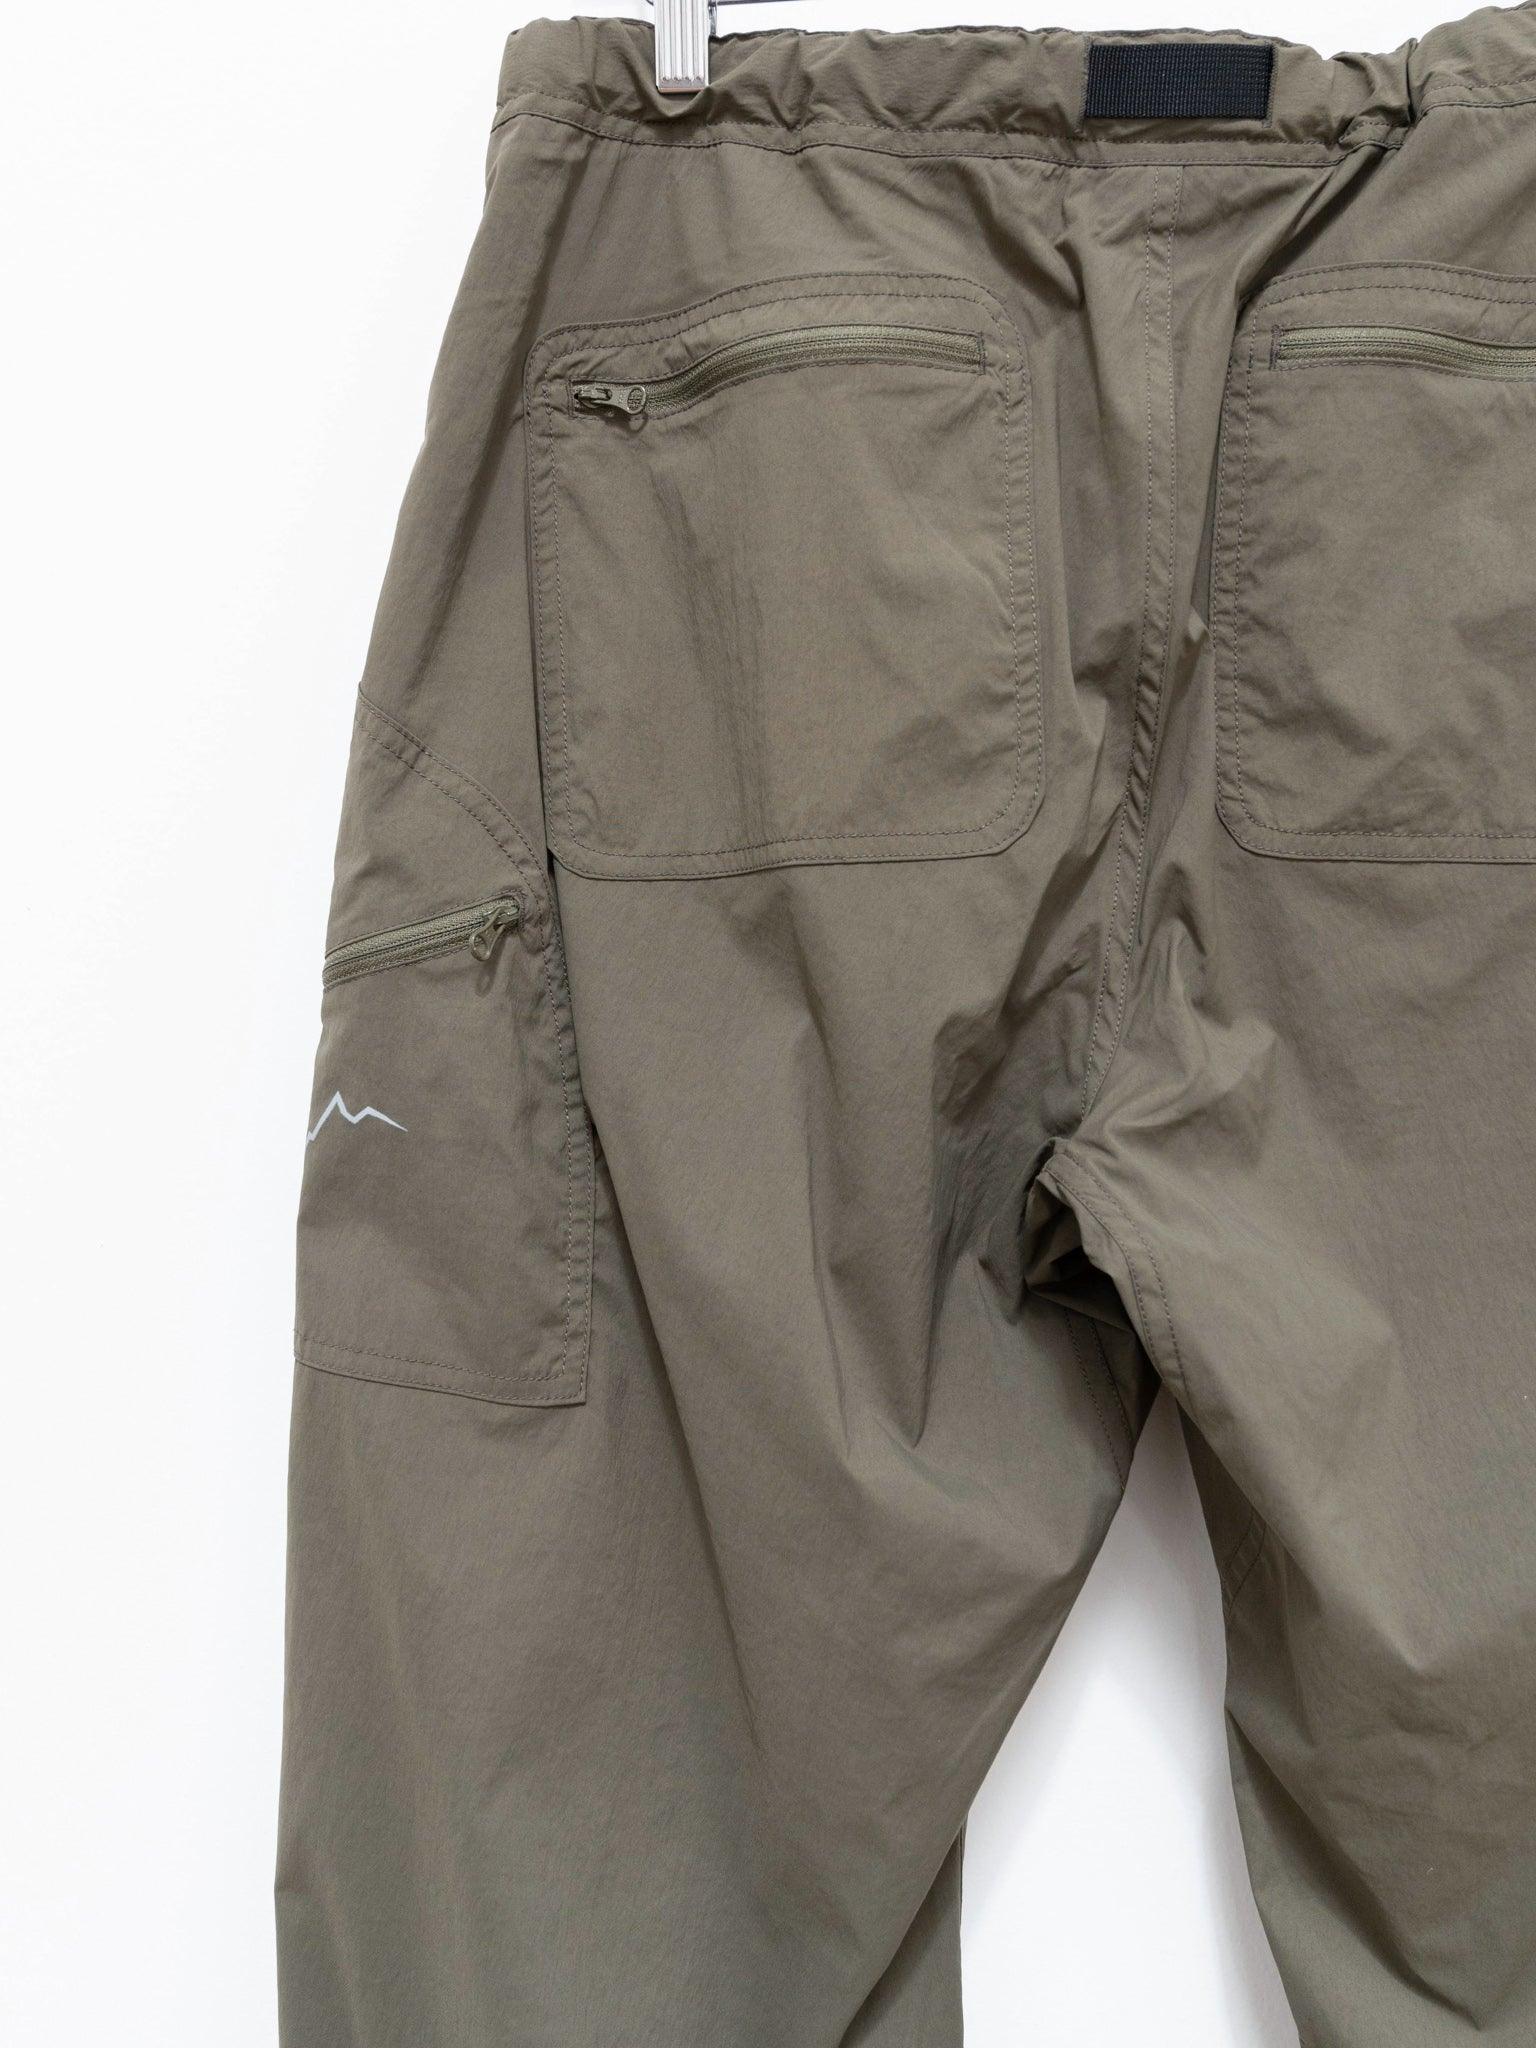 Namu Shop - CAYL 6 Pocket Hiking Pant - Khaki Brown